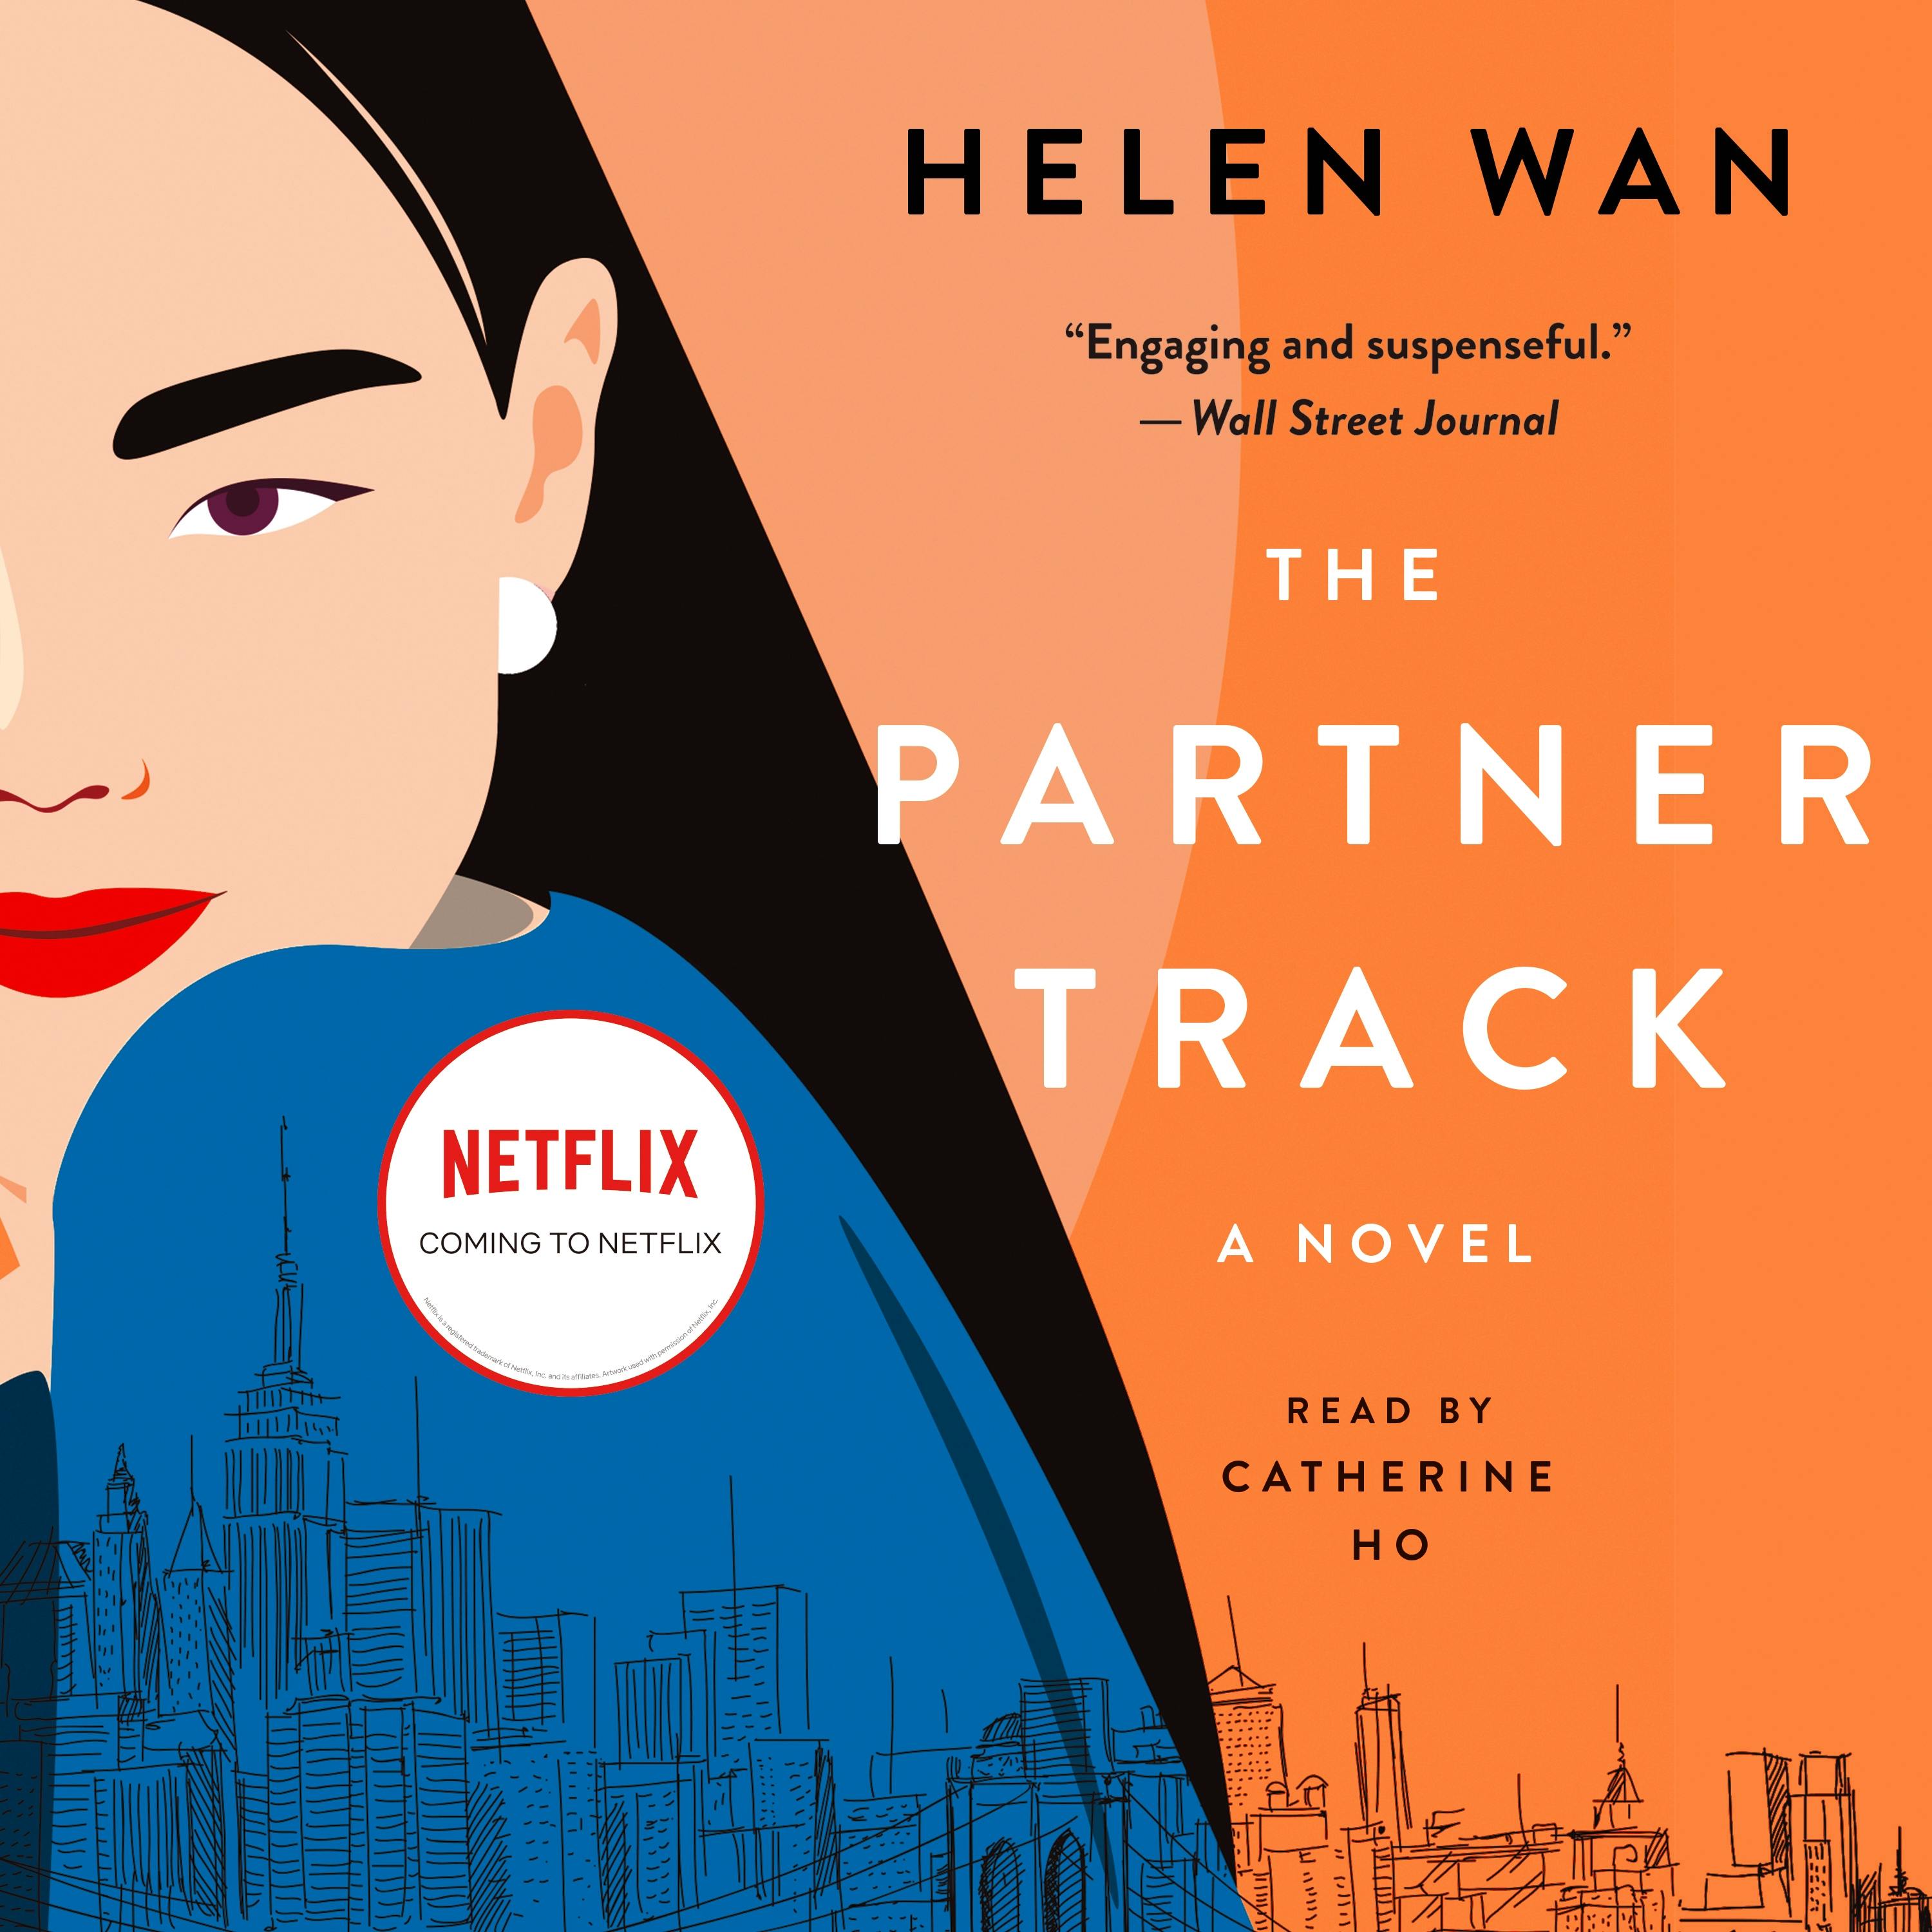 The Partner Track: A Novel by Wan, Helen